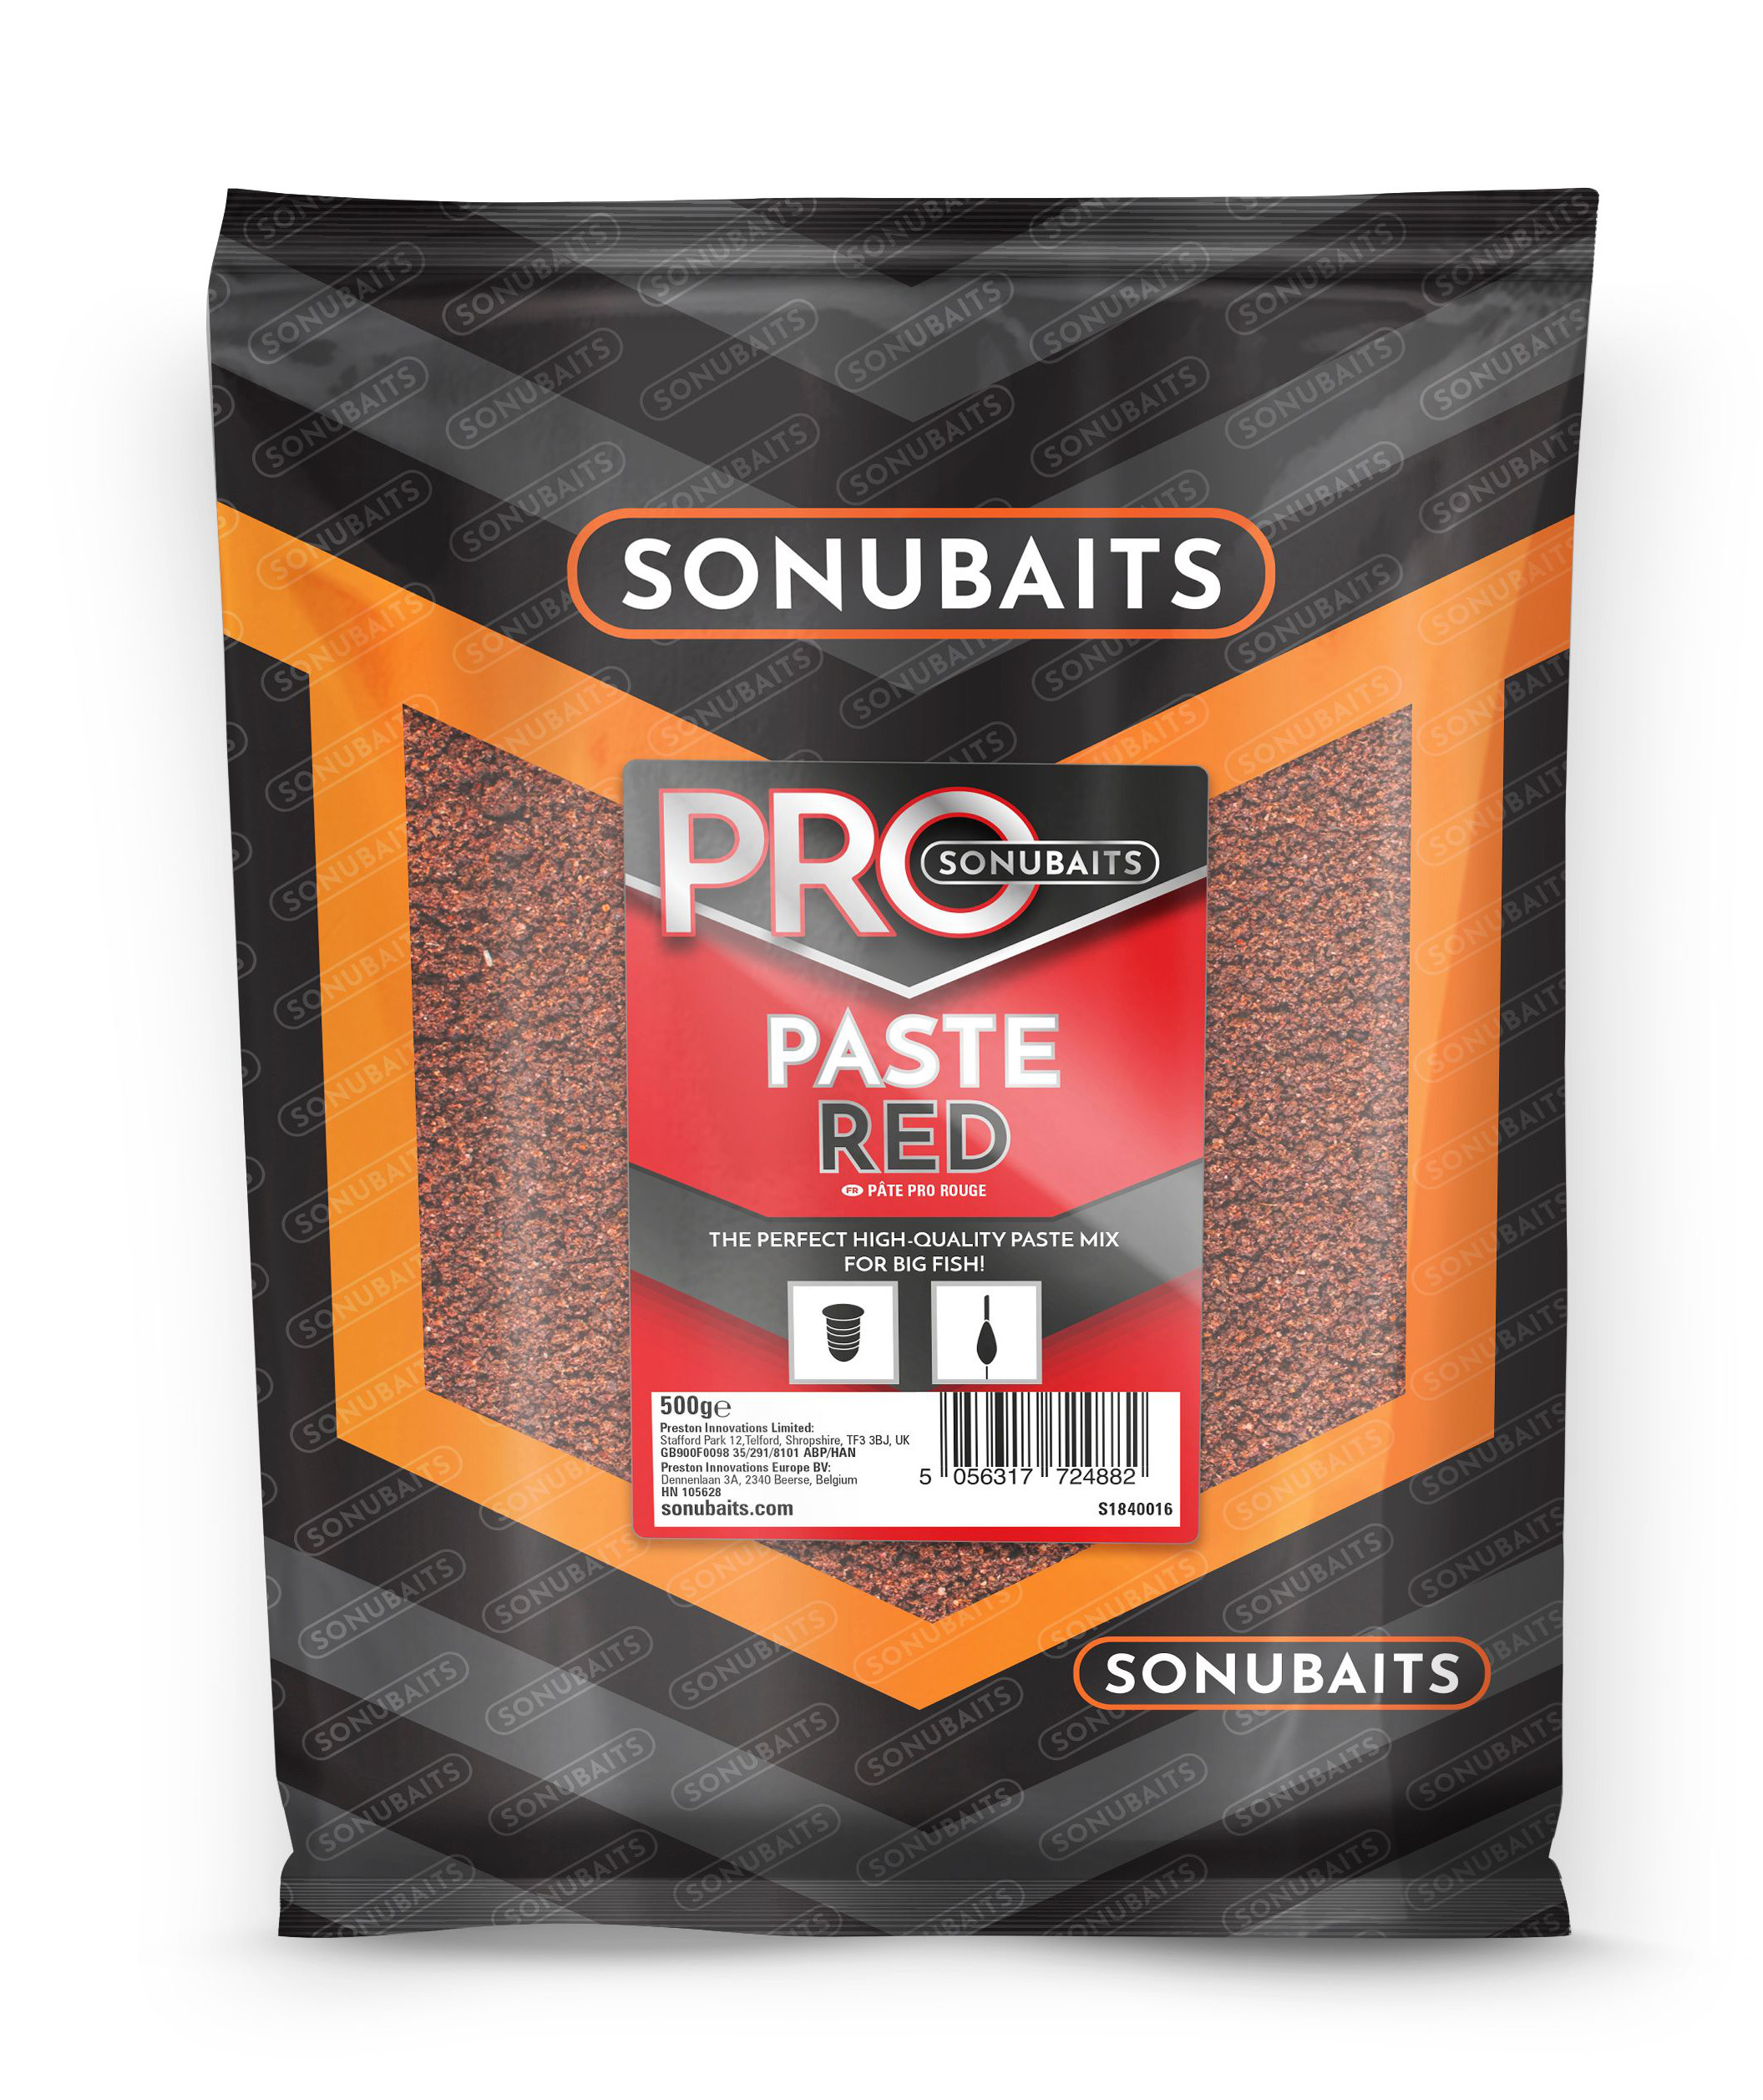 Sonubaits Pro Paste (500g) - Red